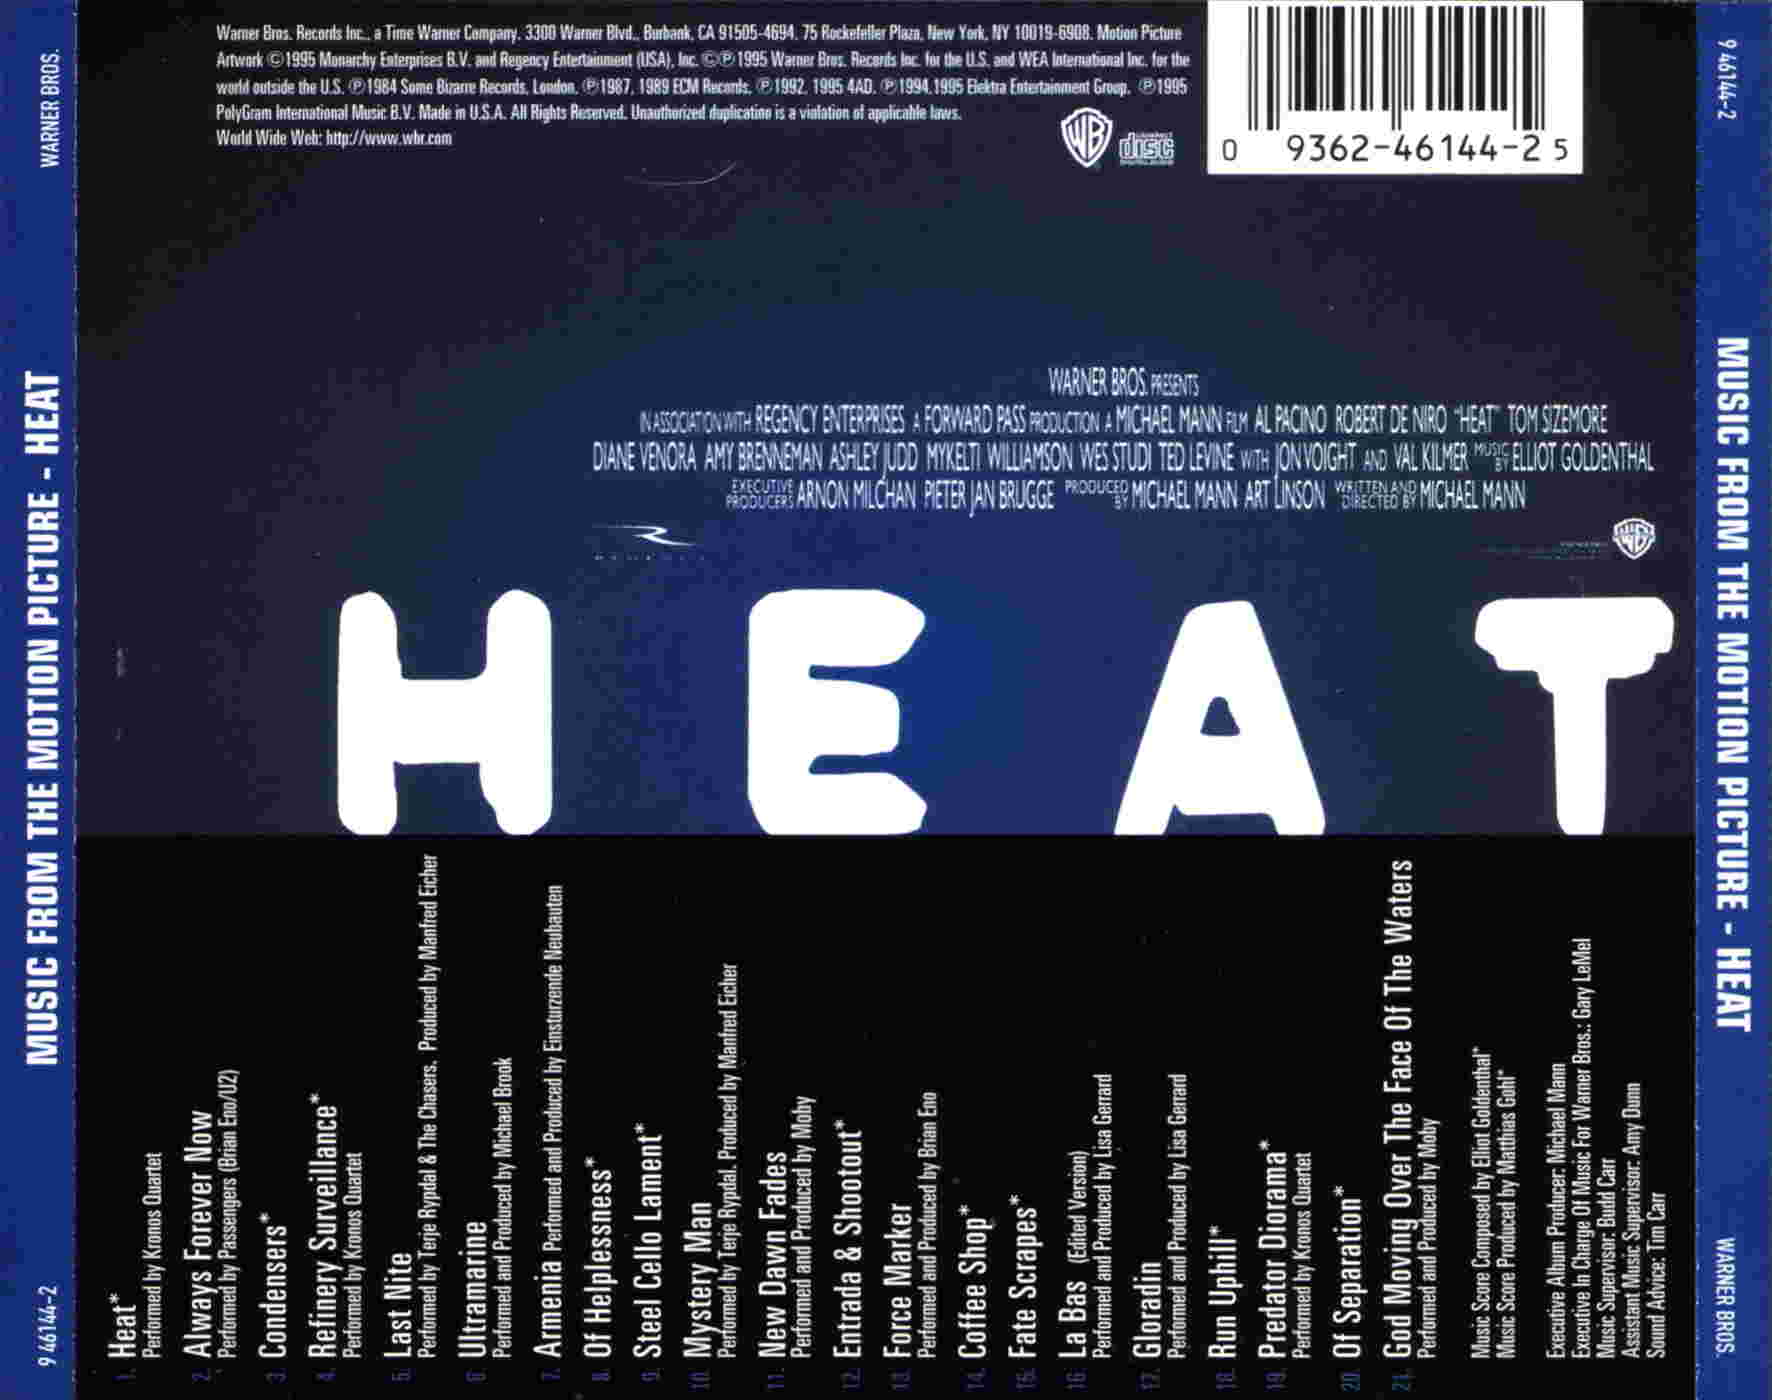 Heat (1995) : Back